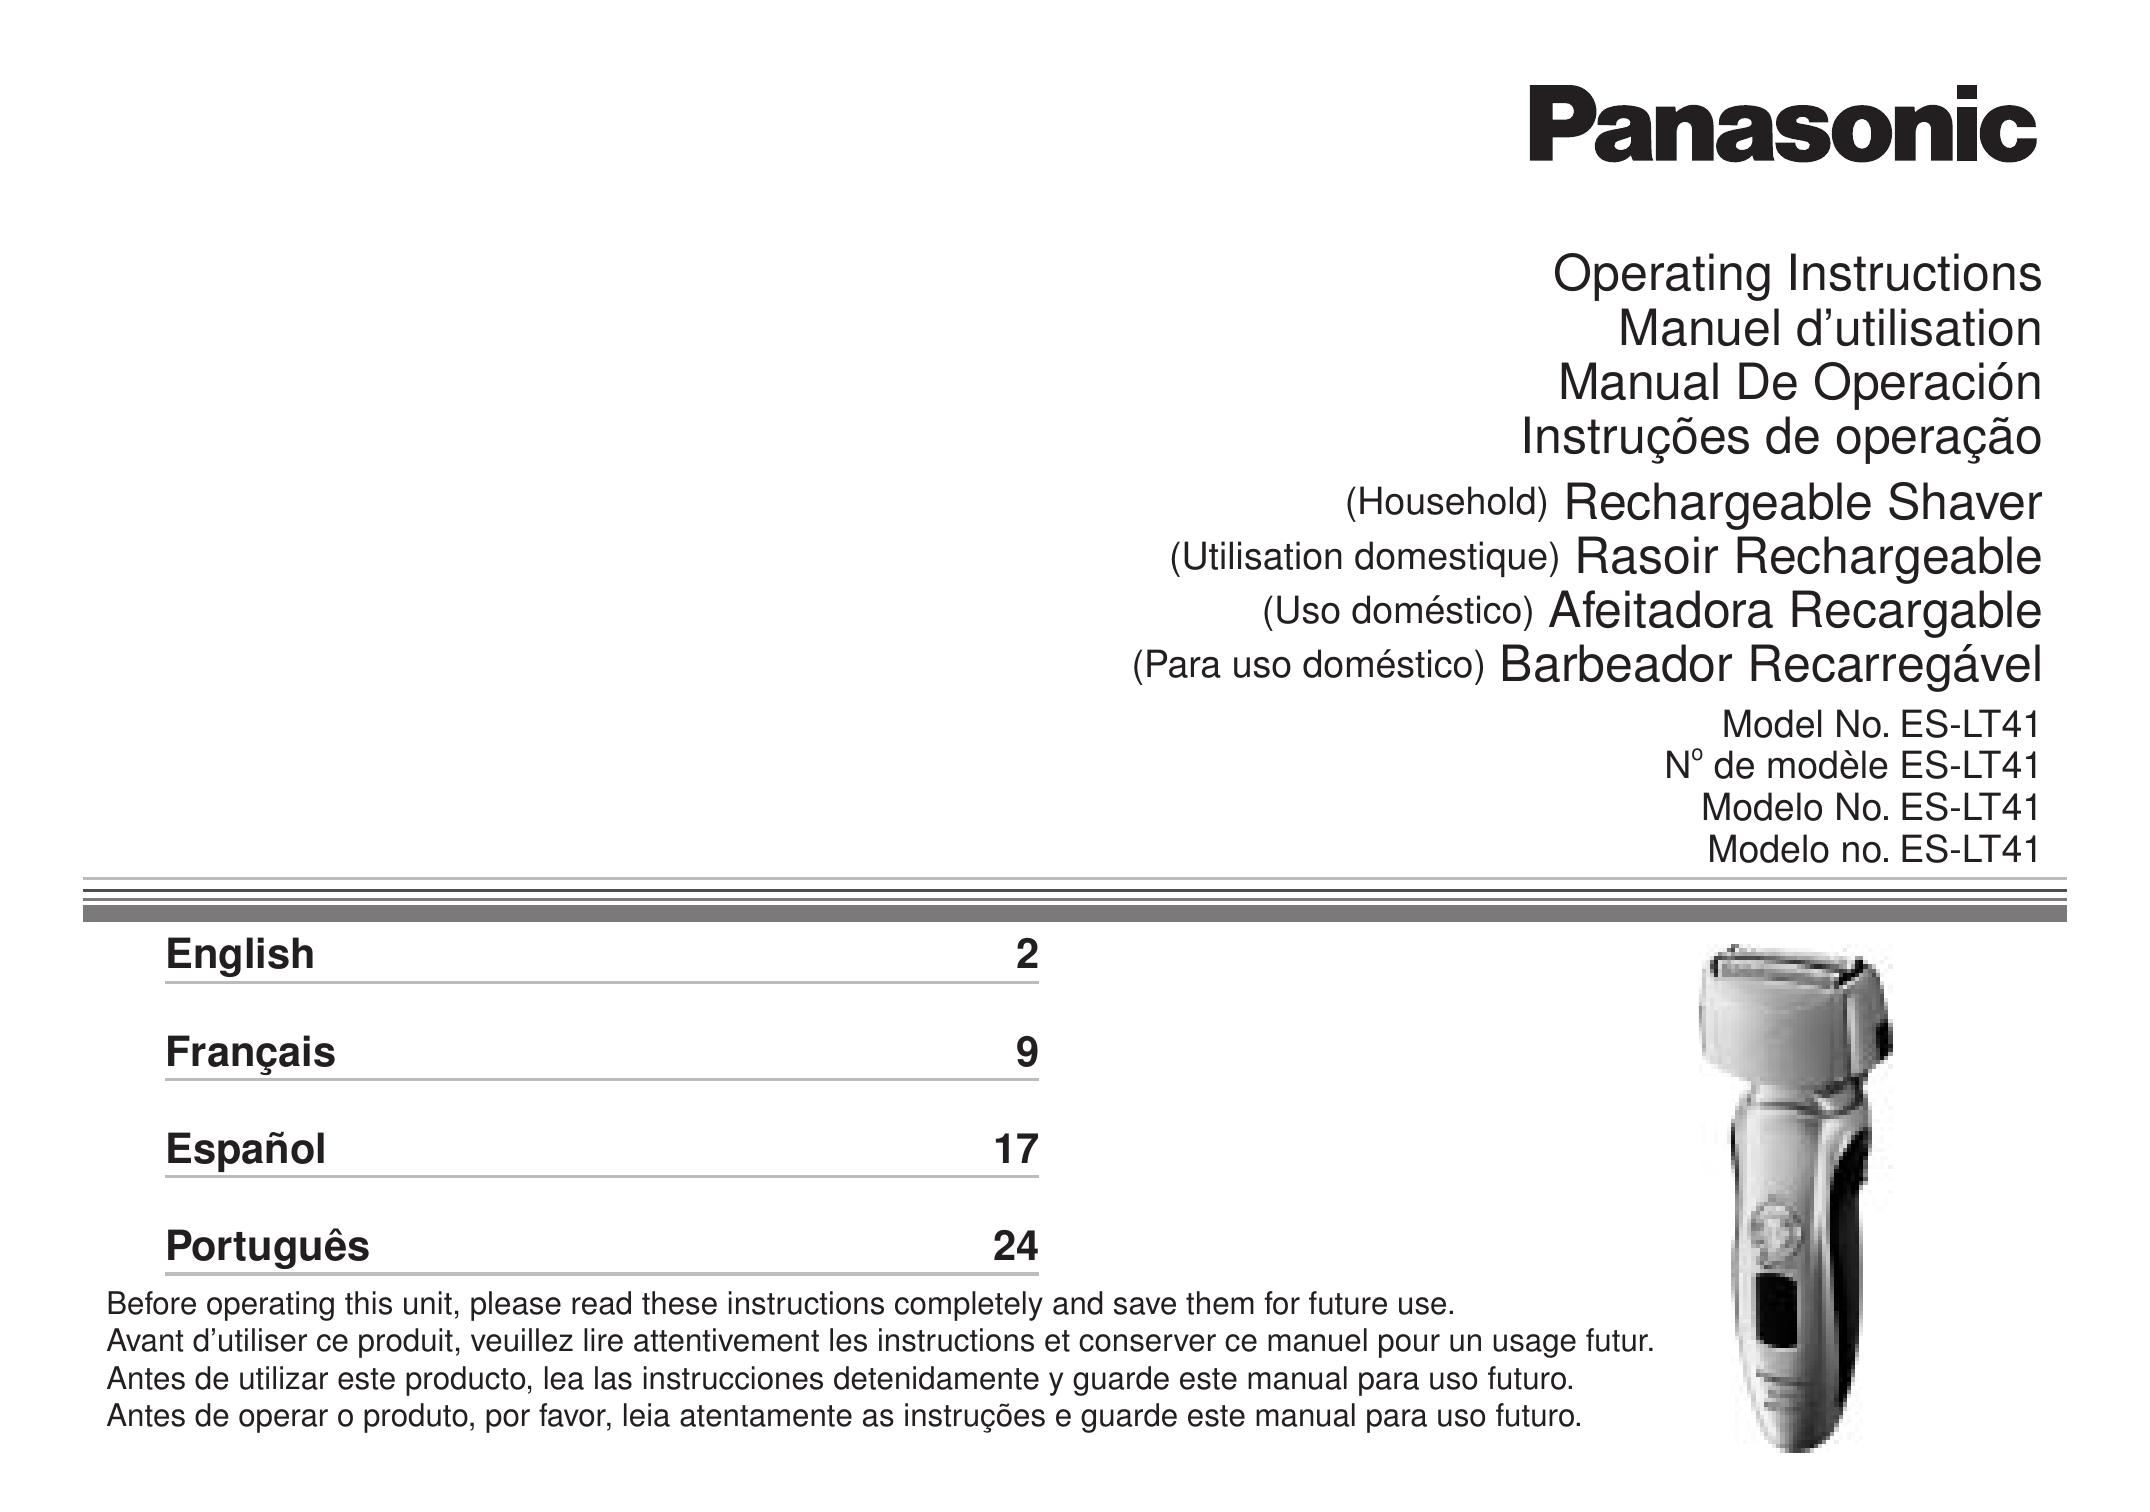 Panasonic ES-LT41 Electric Shaver User Manual